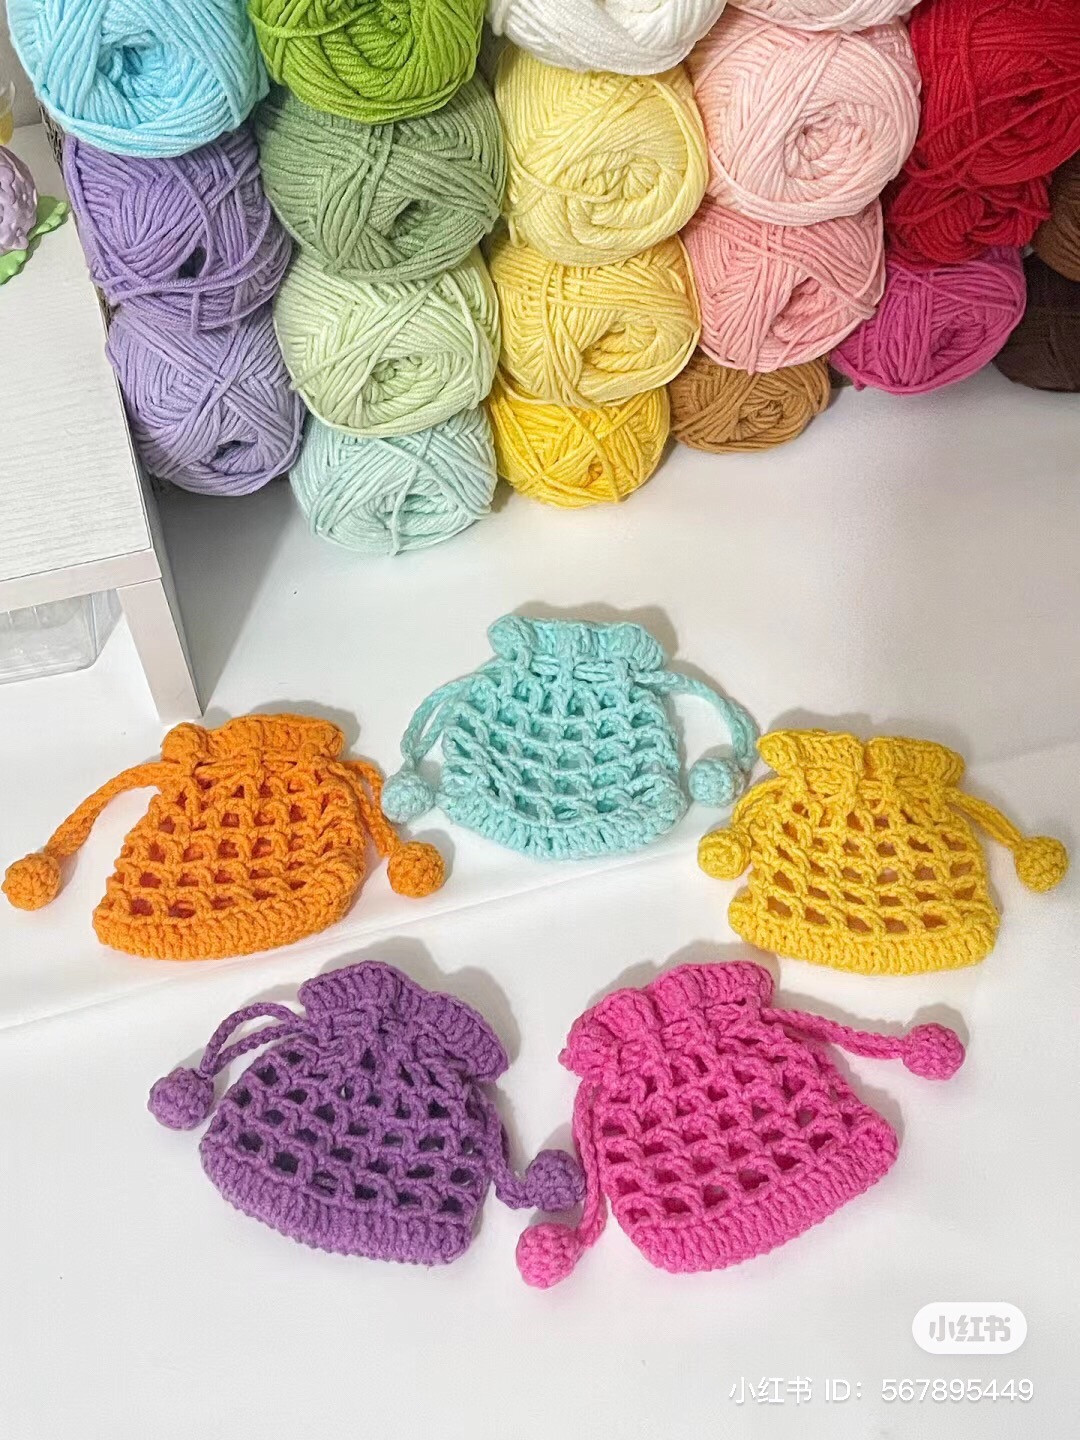 Crochet pattern for checkered drawstring bag